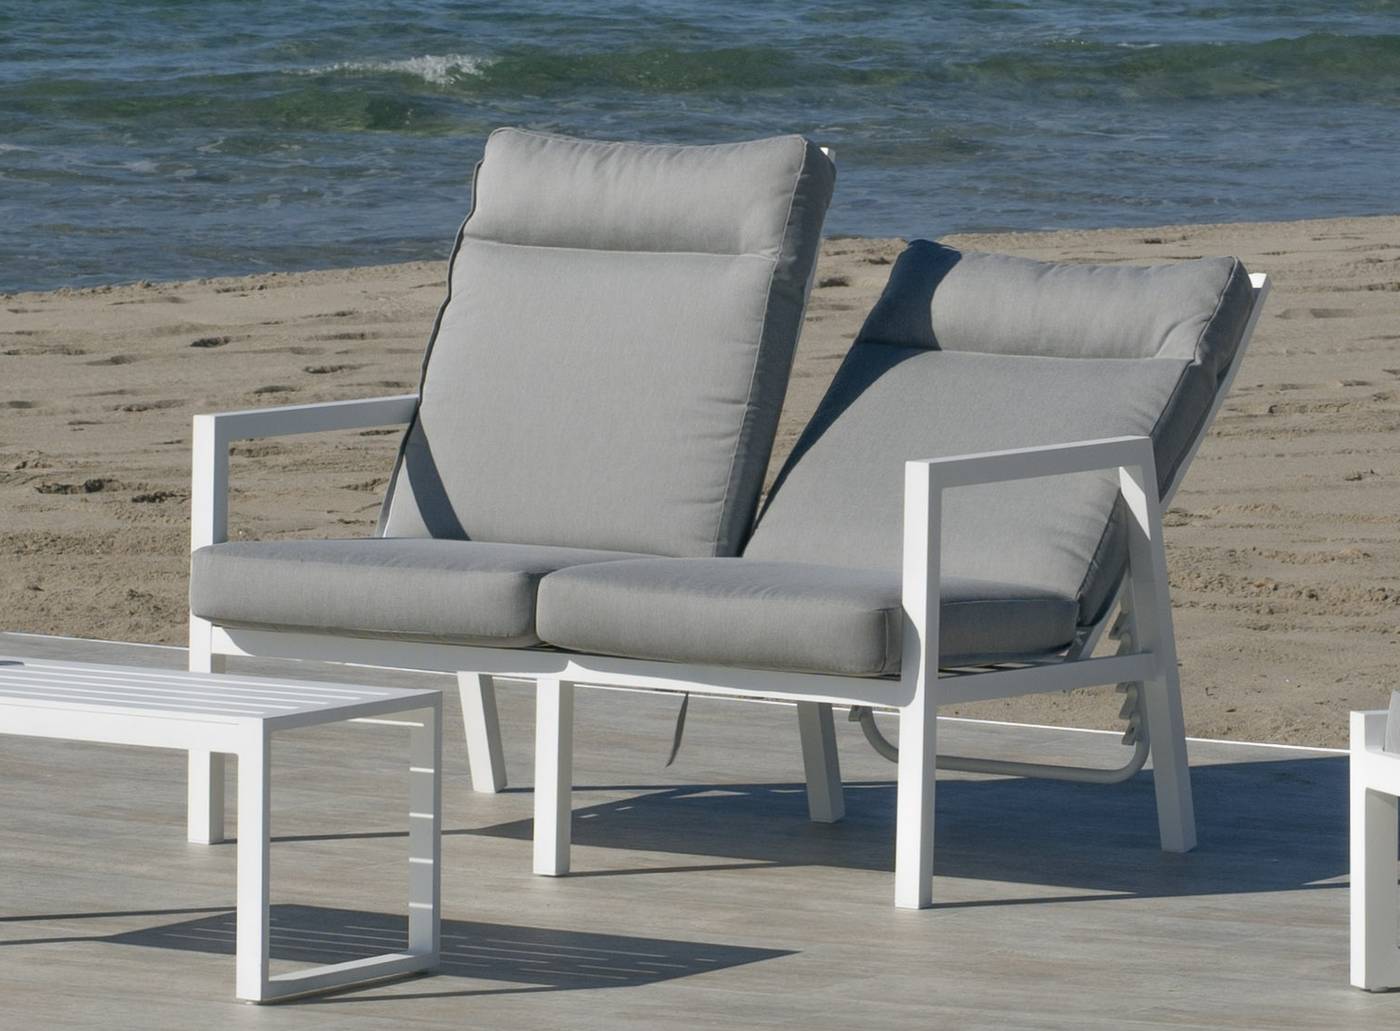 Set Aluminio Voriam-9 - Conjunto aluminio: sofá 2 plazas + 2 sillones + mesa de centro + 2 taburetes. Respaldos reclinables. Colores: blanco, antracita, champagne, plata o marrón.